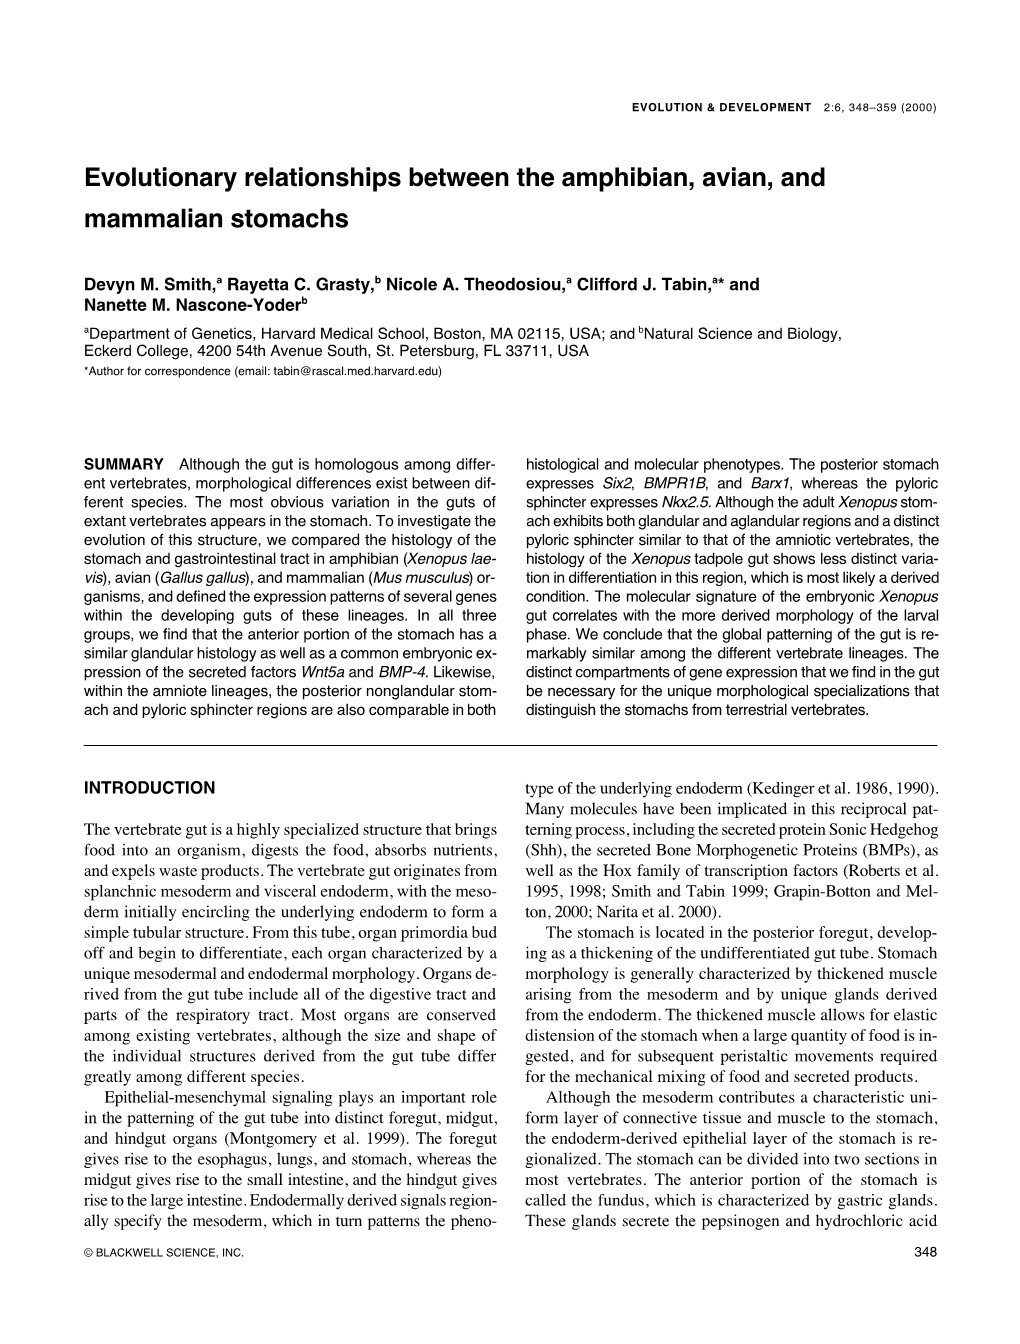 Evolutionary Relationships Between the Amphibian, Avian, and Mammalian Stomachs